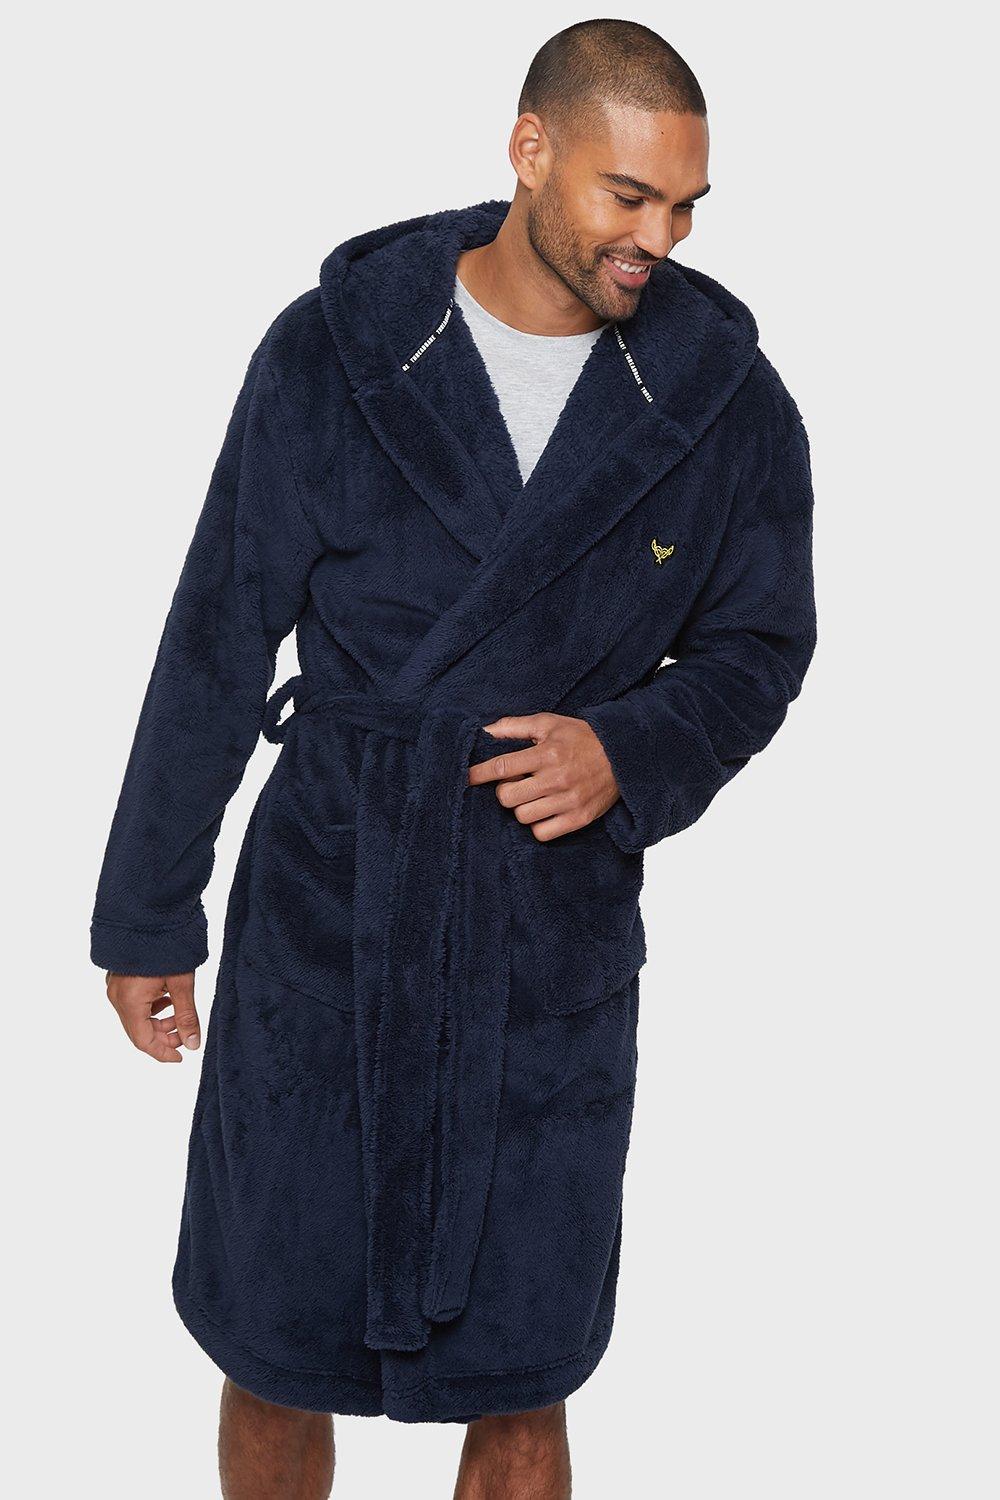 EQWLJWE Mens Robes Big and Tall Terry Cloth Bathrobe Cotton Towel Hooded Full  Length Housecoat Hot Tub Bath Spa Sleepwear - Walmart.com